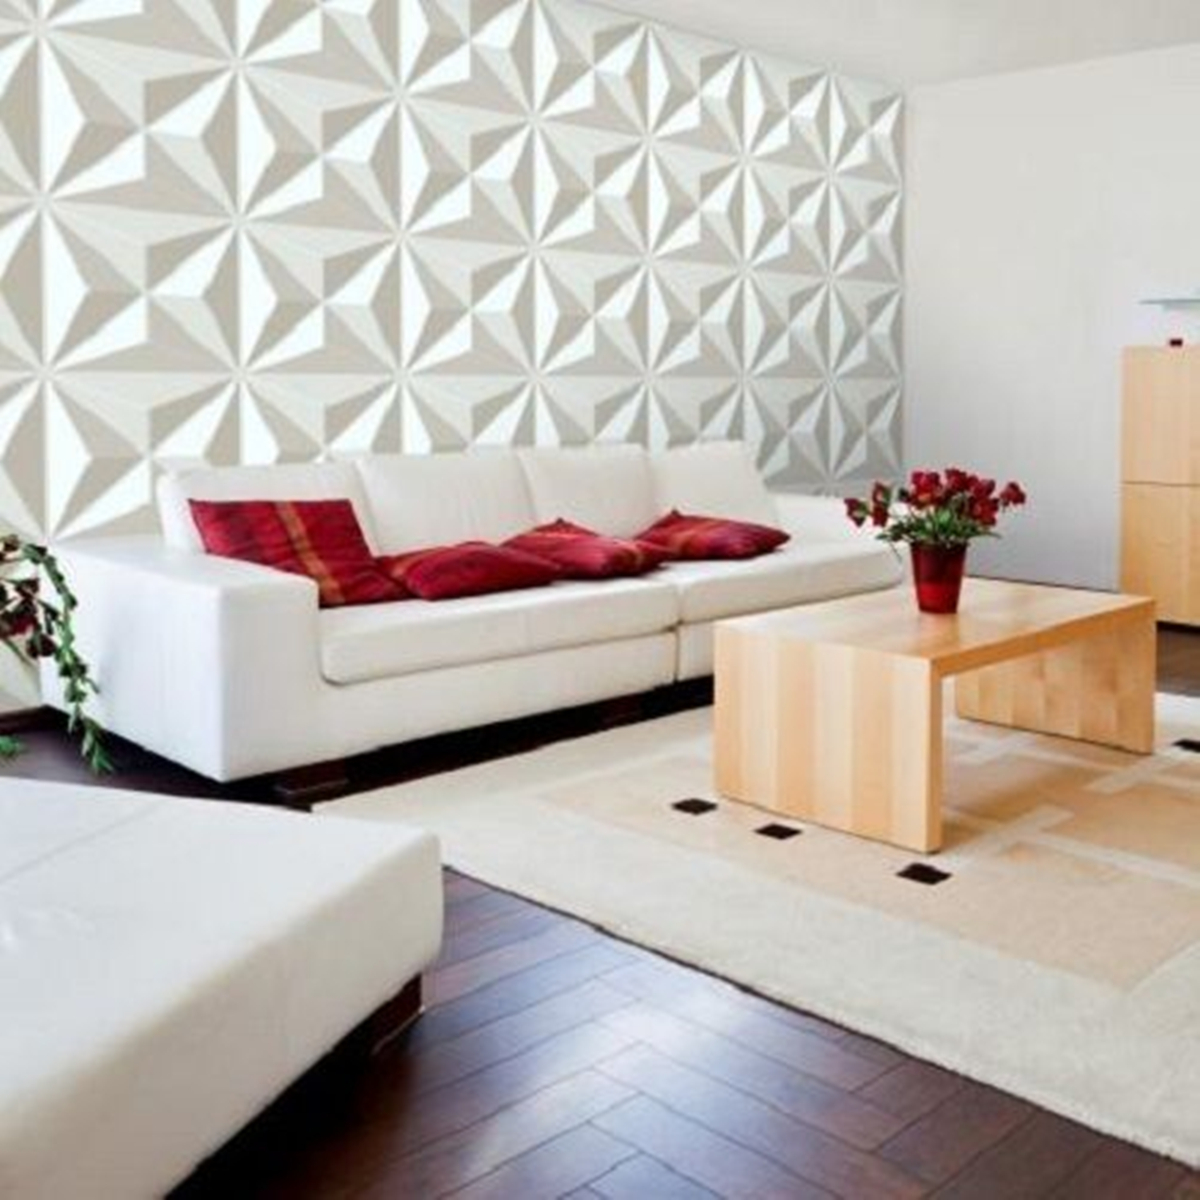 3d Wall Designs For Living Room - HD Wallpaper 